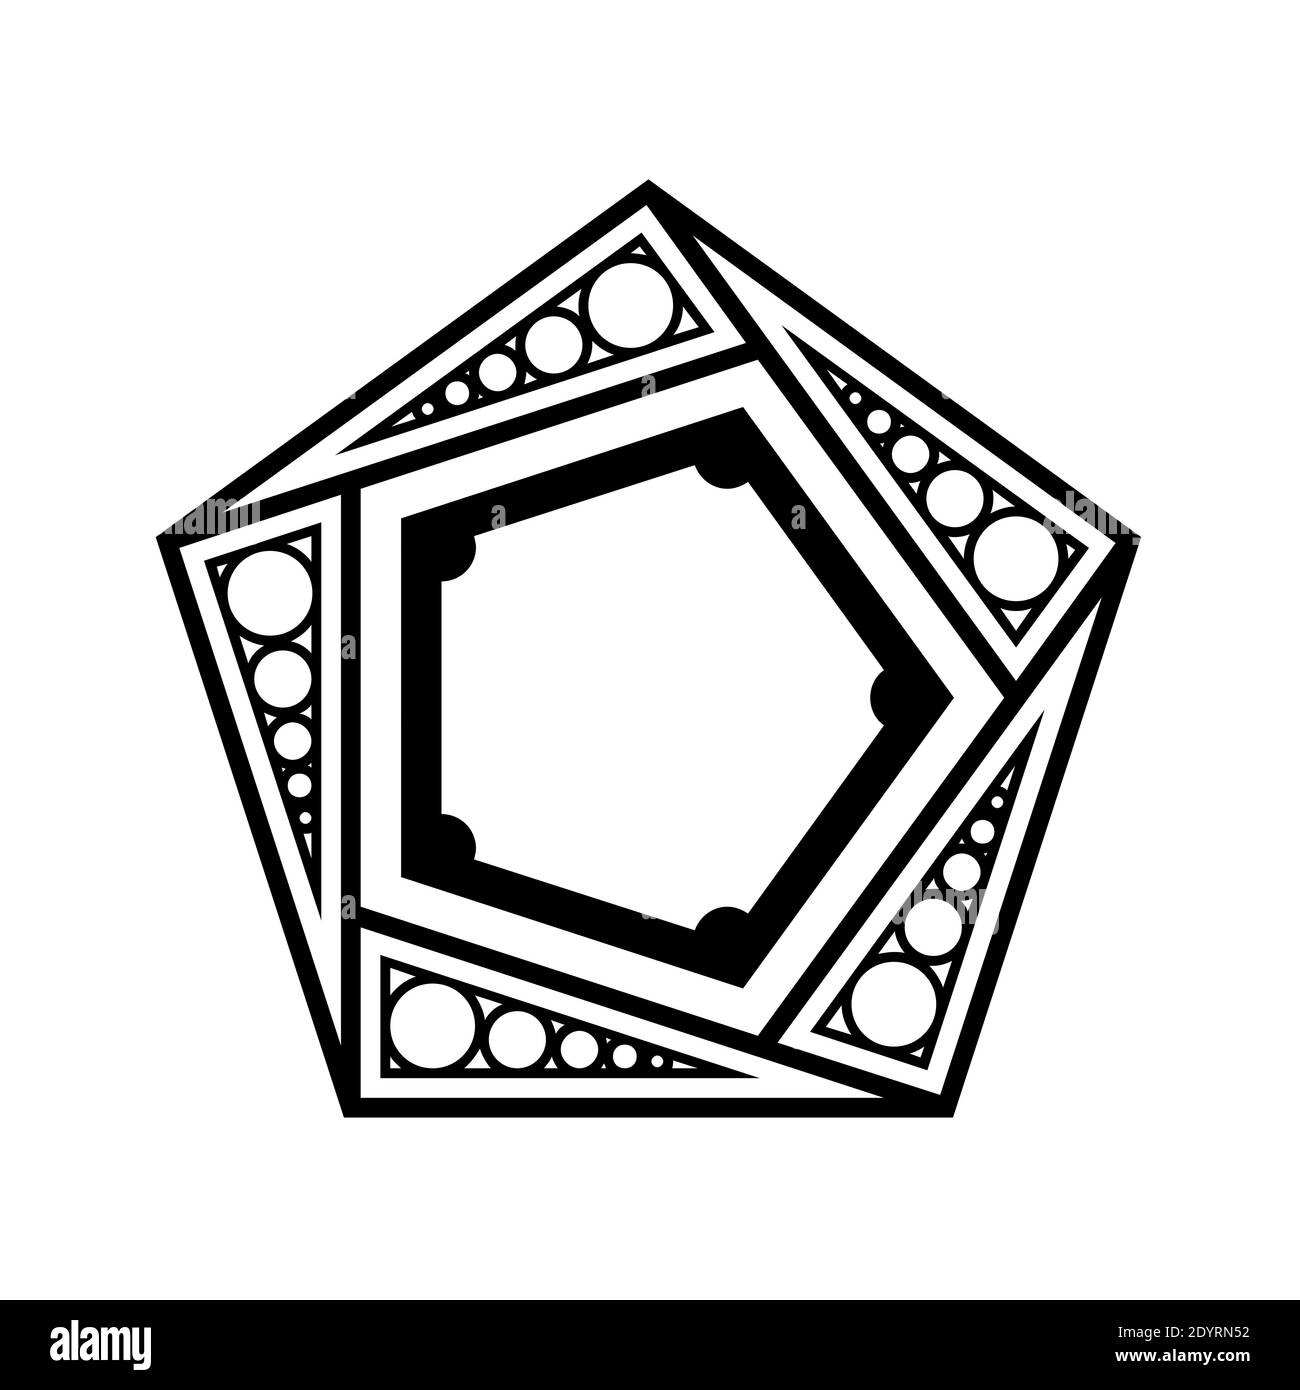 Pentagonal symbol icon illustration Stock Photo